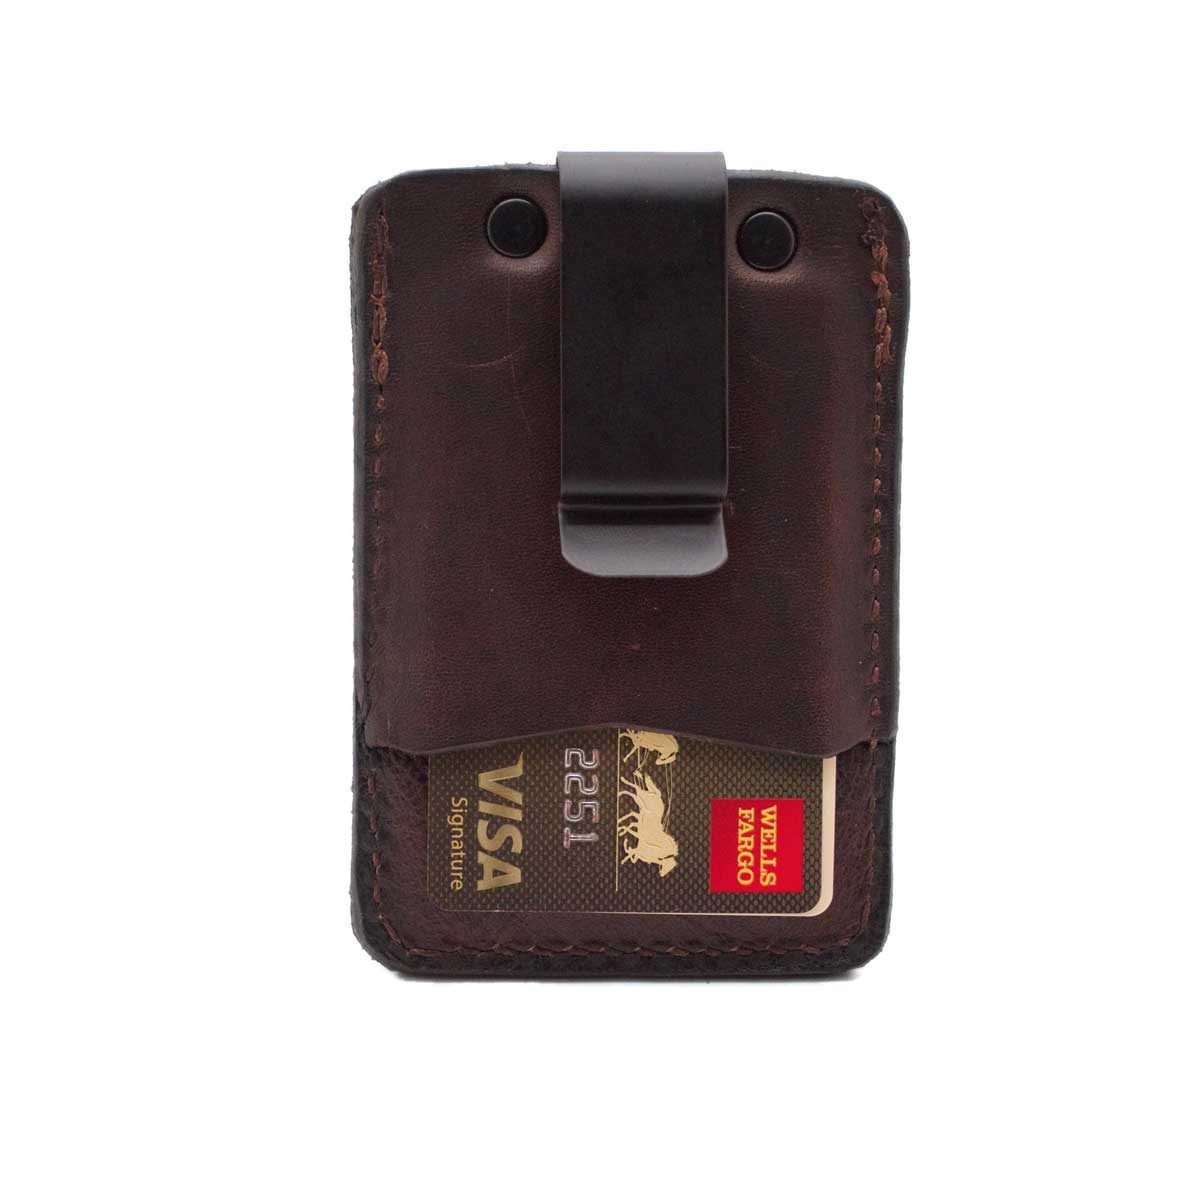 Back pocket of mahogany minimalist wallet with cards in pocket